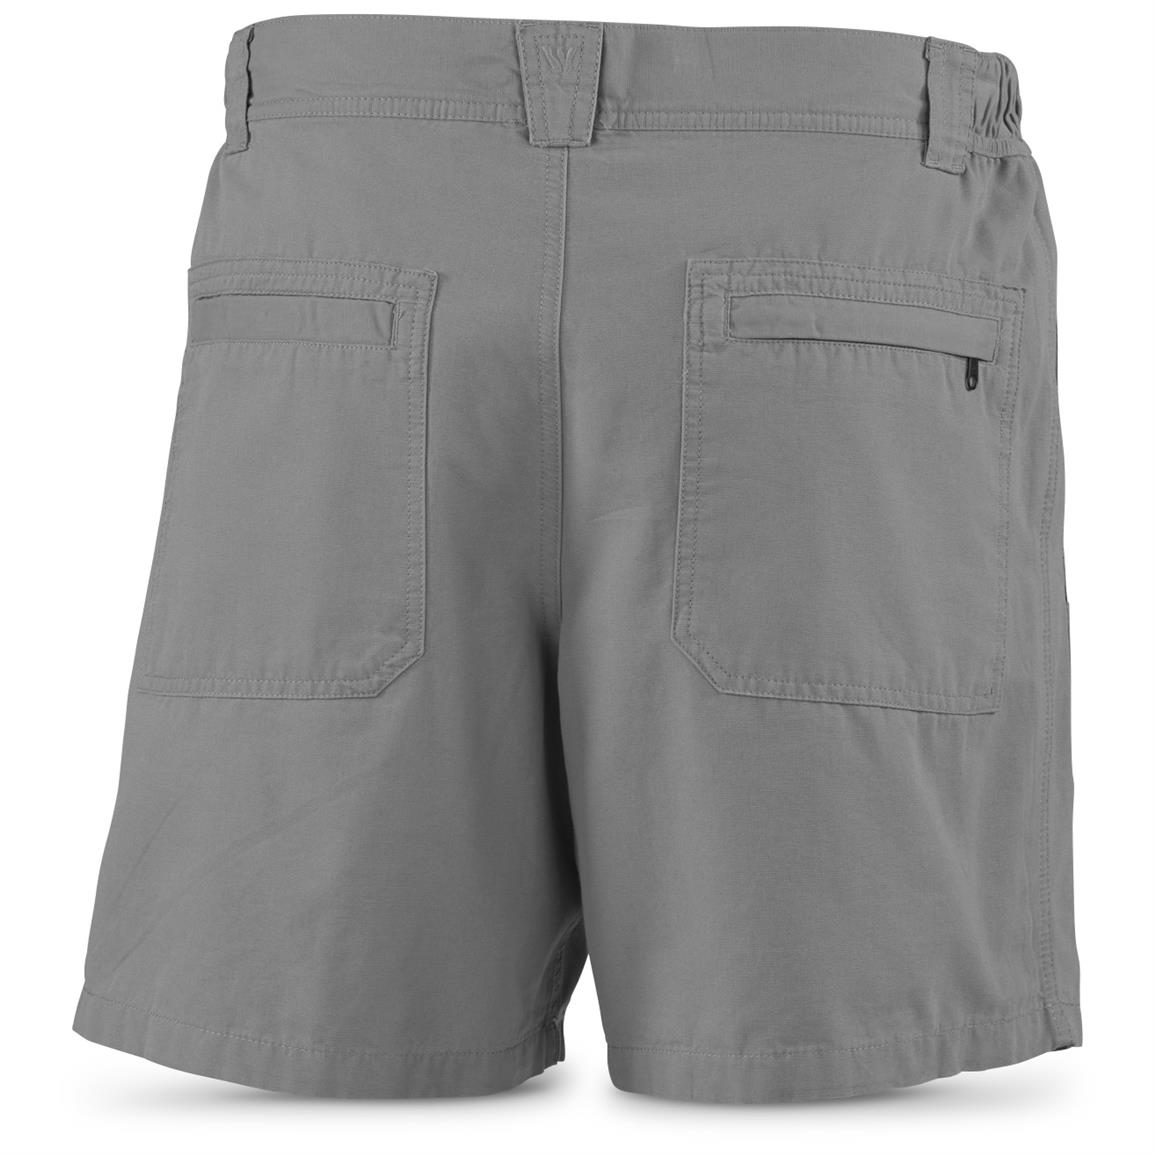 White Sierra Men's Granby Shorts - 657819, Shorts at Sportsman's Guide